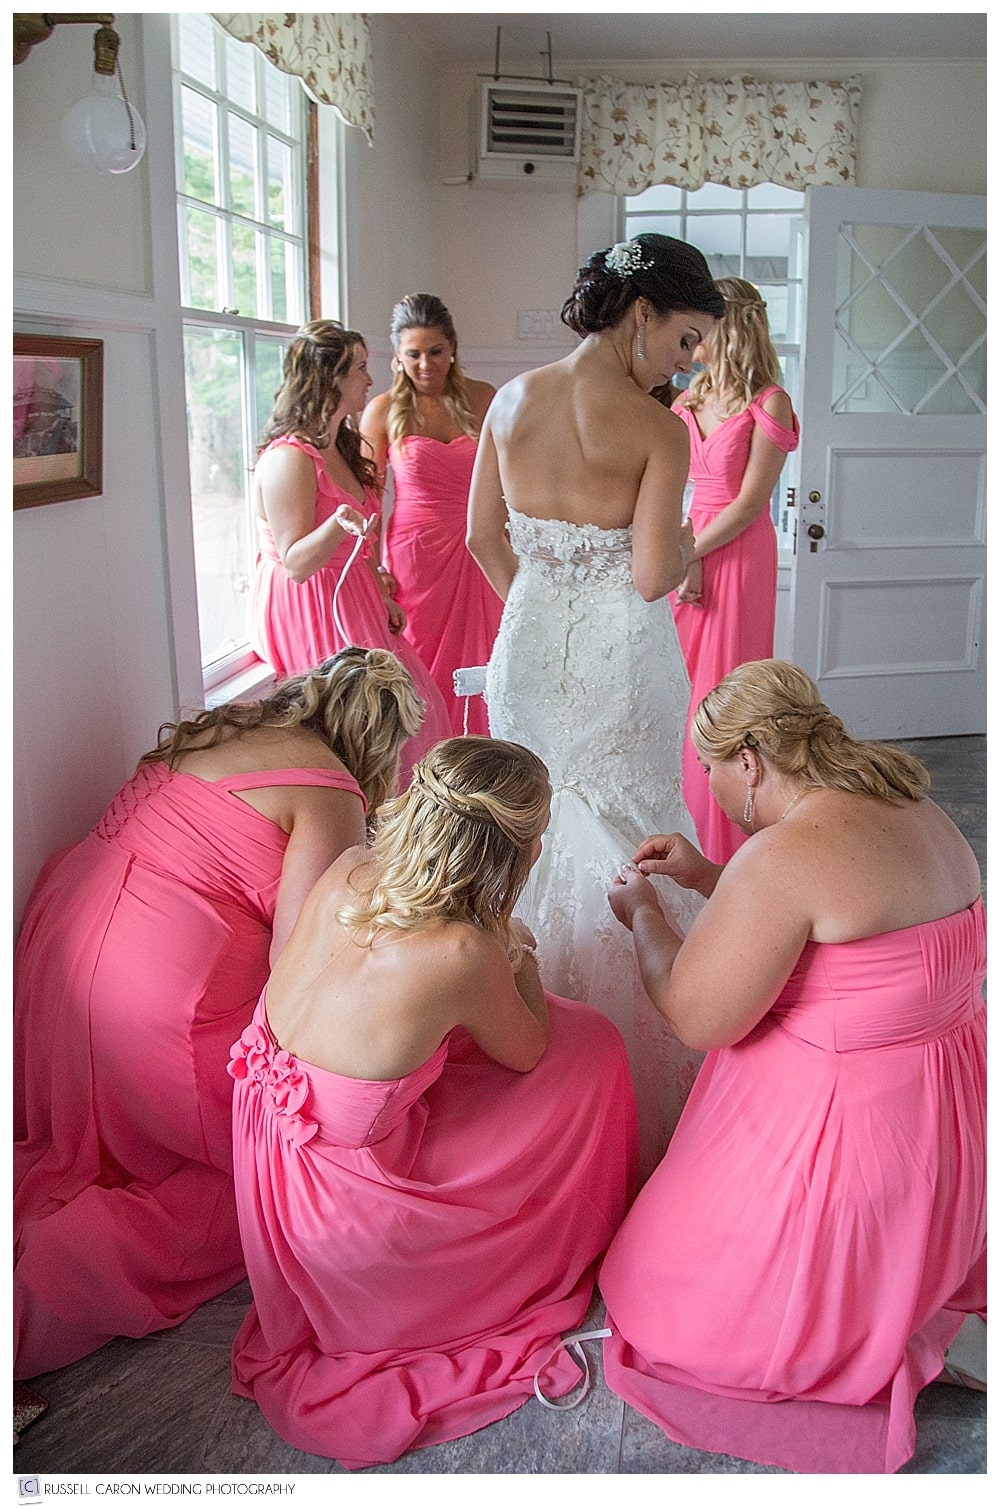 bridesmaids bustling bride's dress